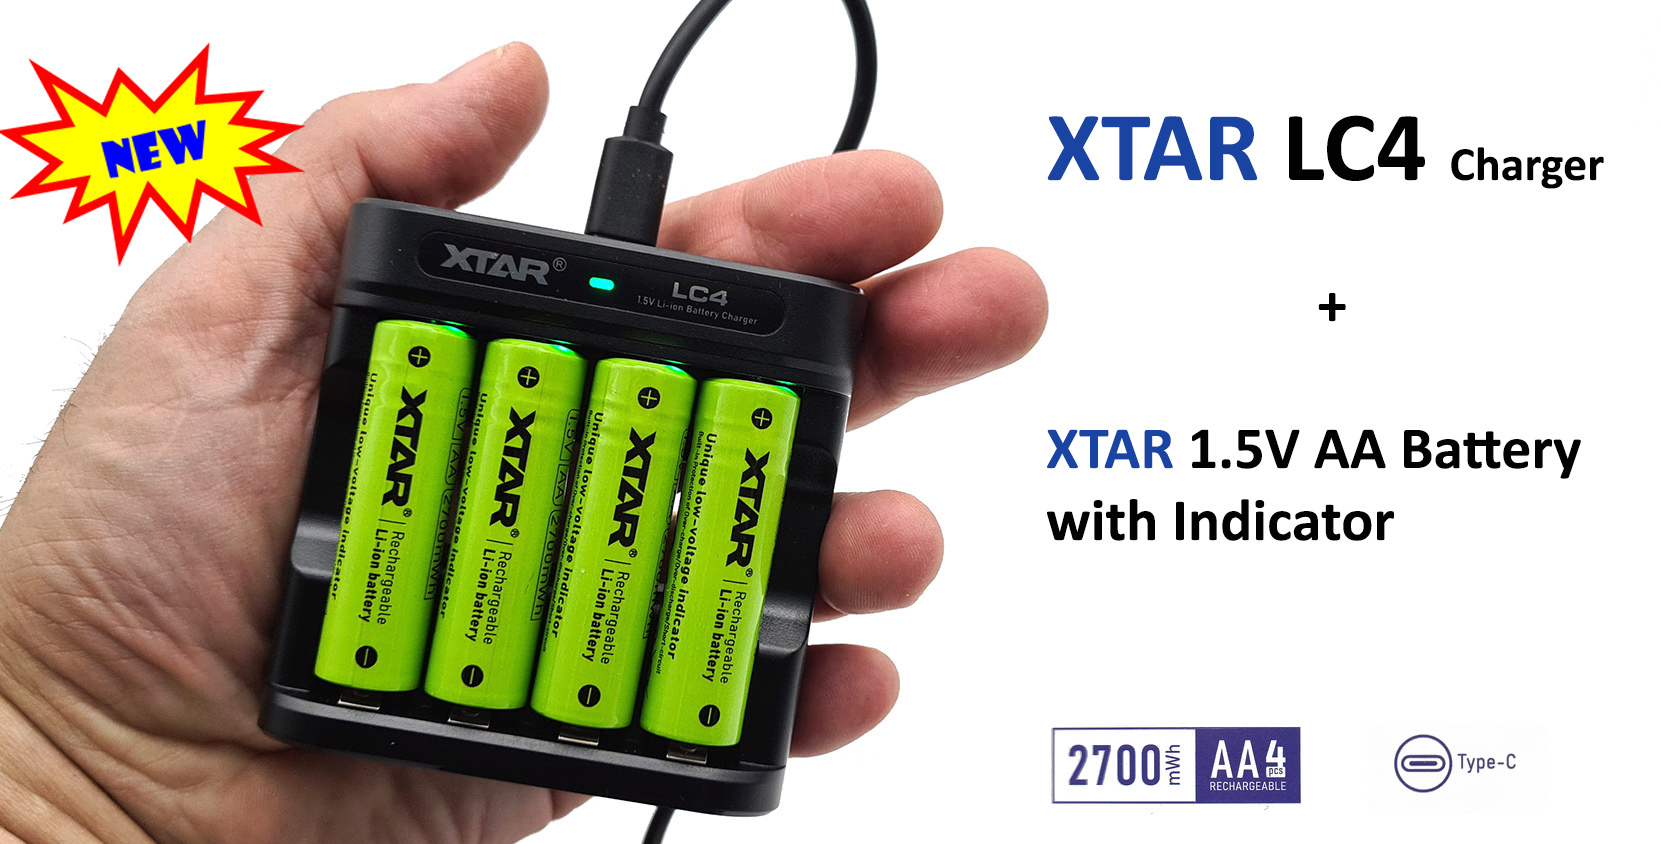 Recensione caricabatterie XTAR LC4 + batterie AA XTAR con indicatore LED. -  cpfitalia forum